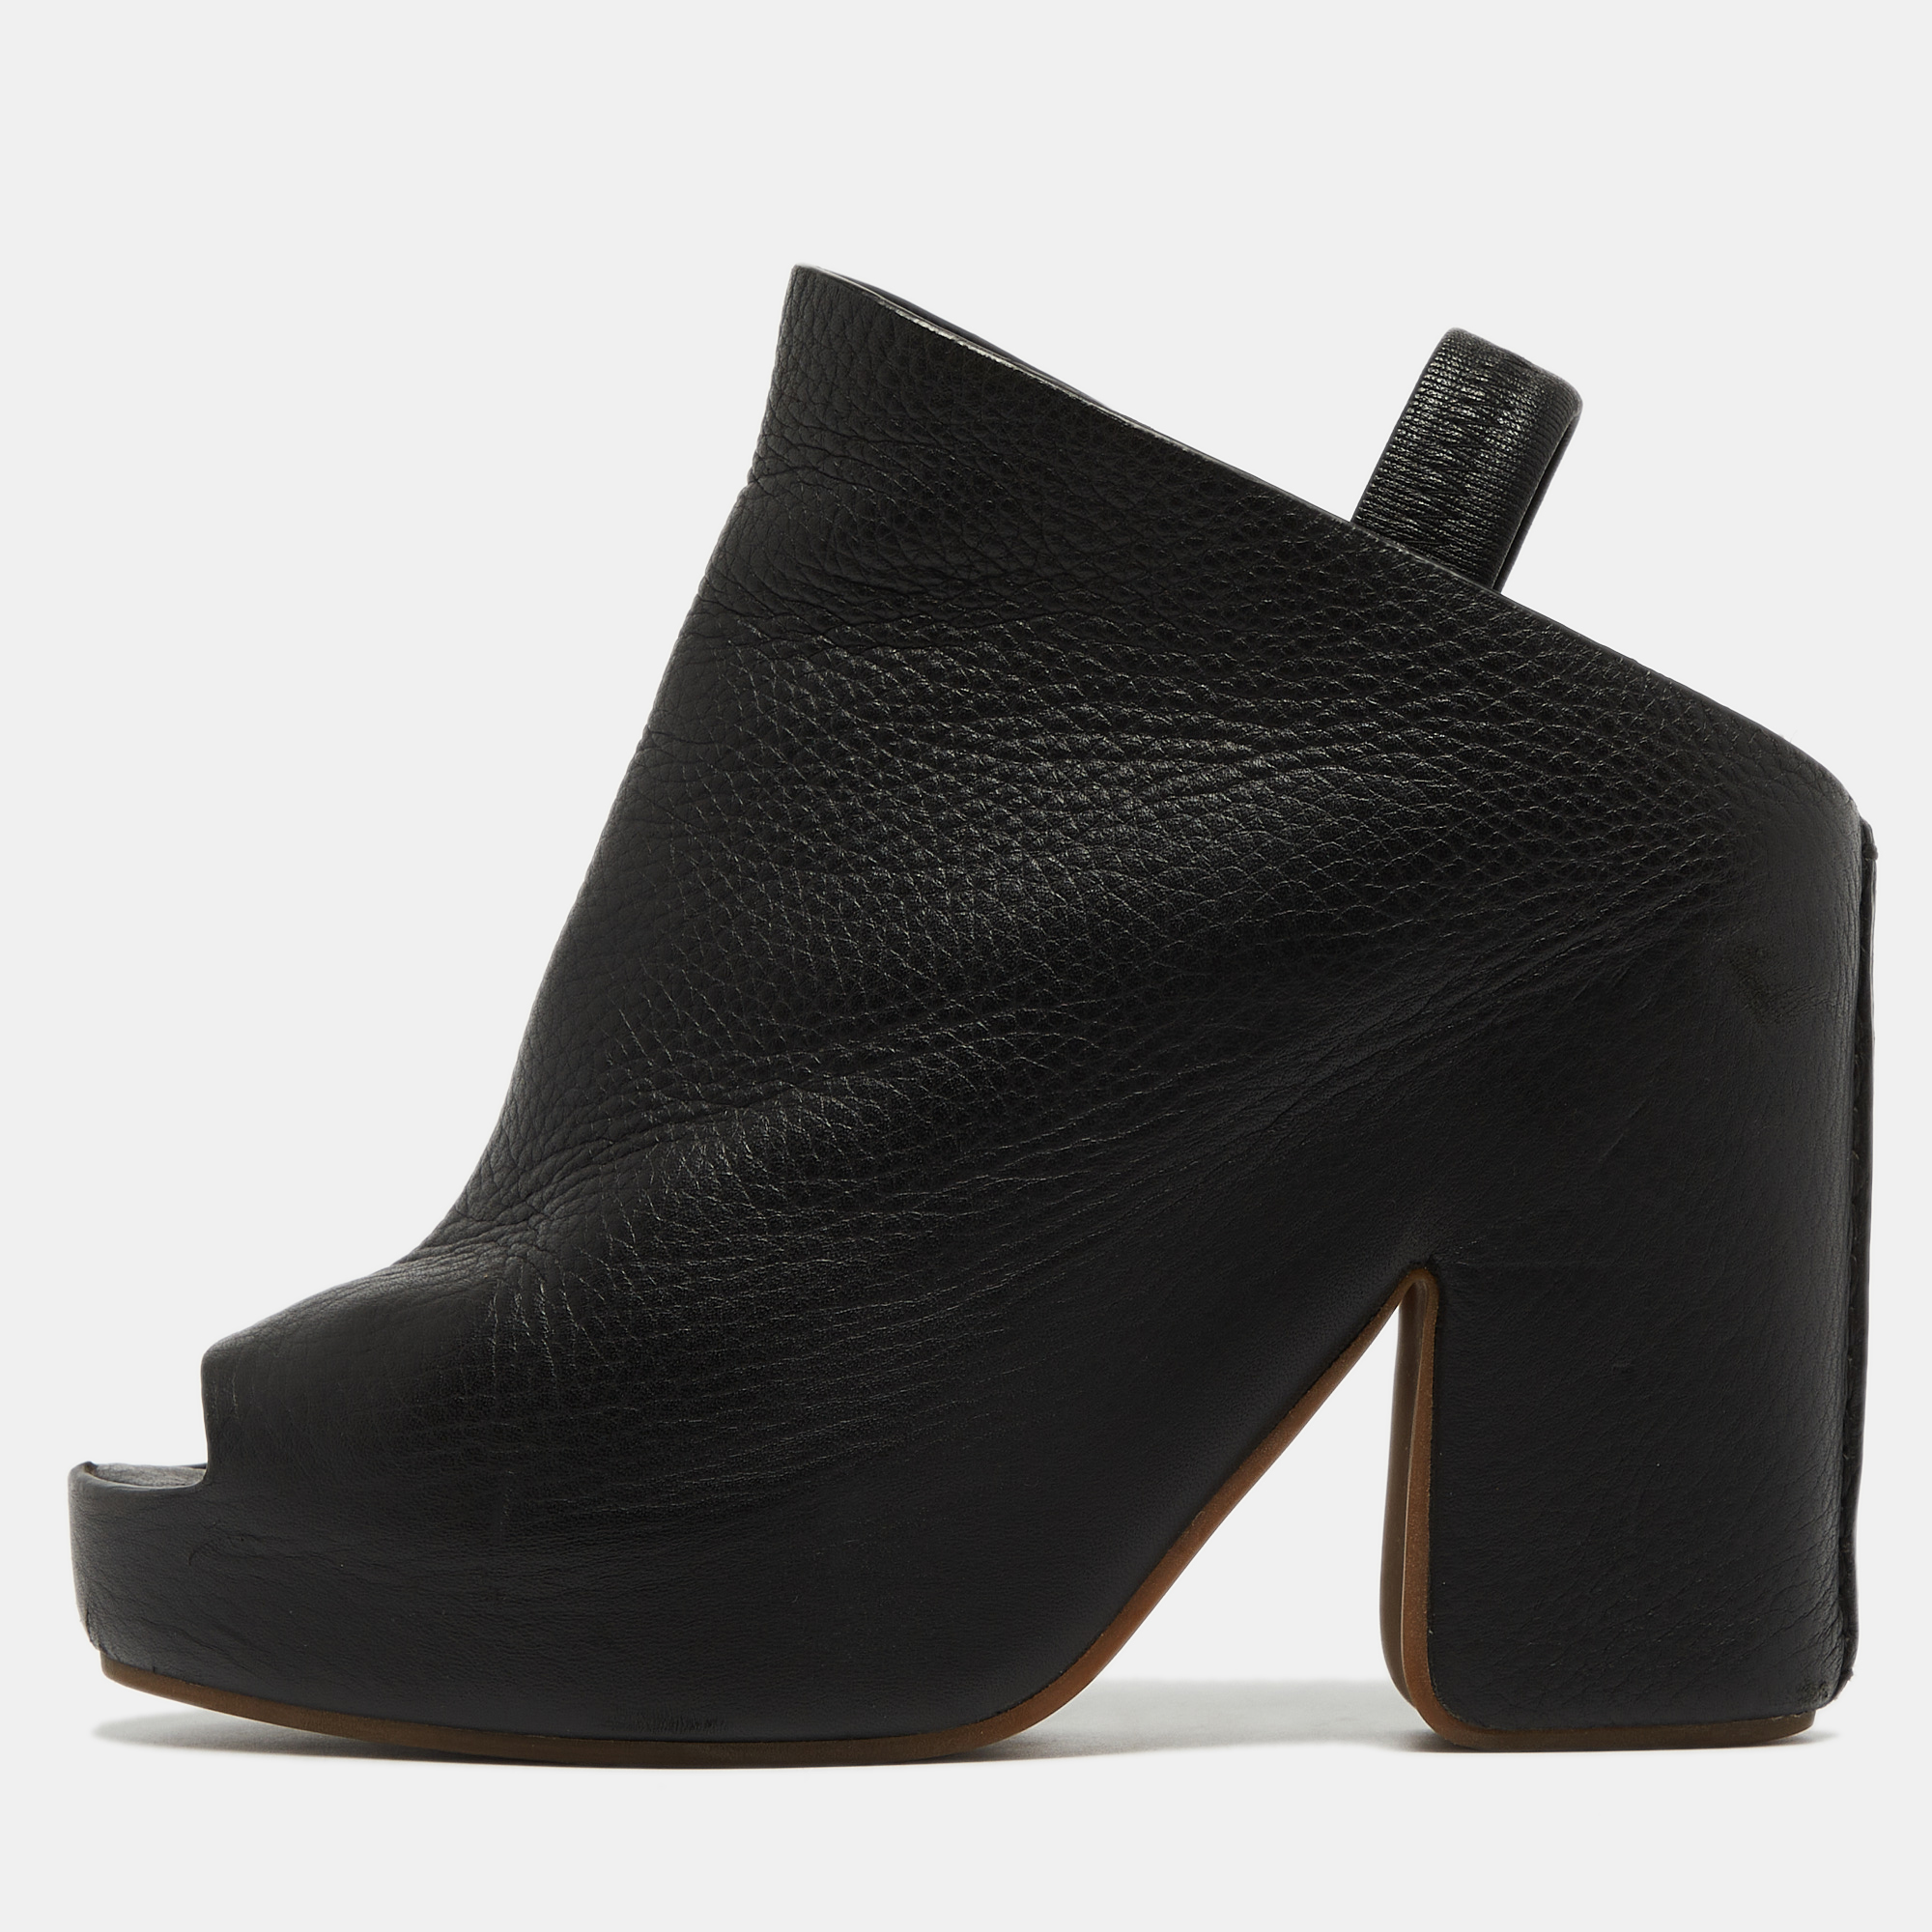 Balenciaga black leather platform slingback sandals size 39